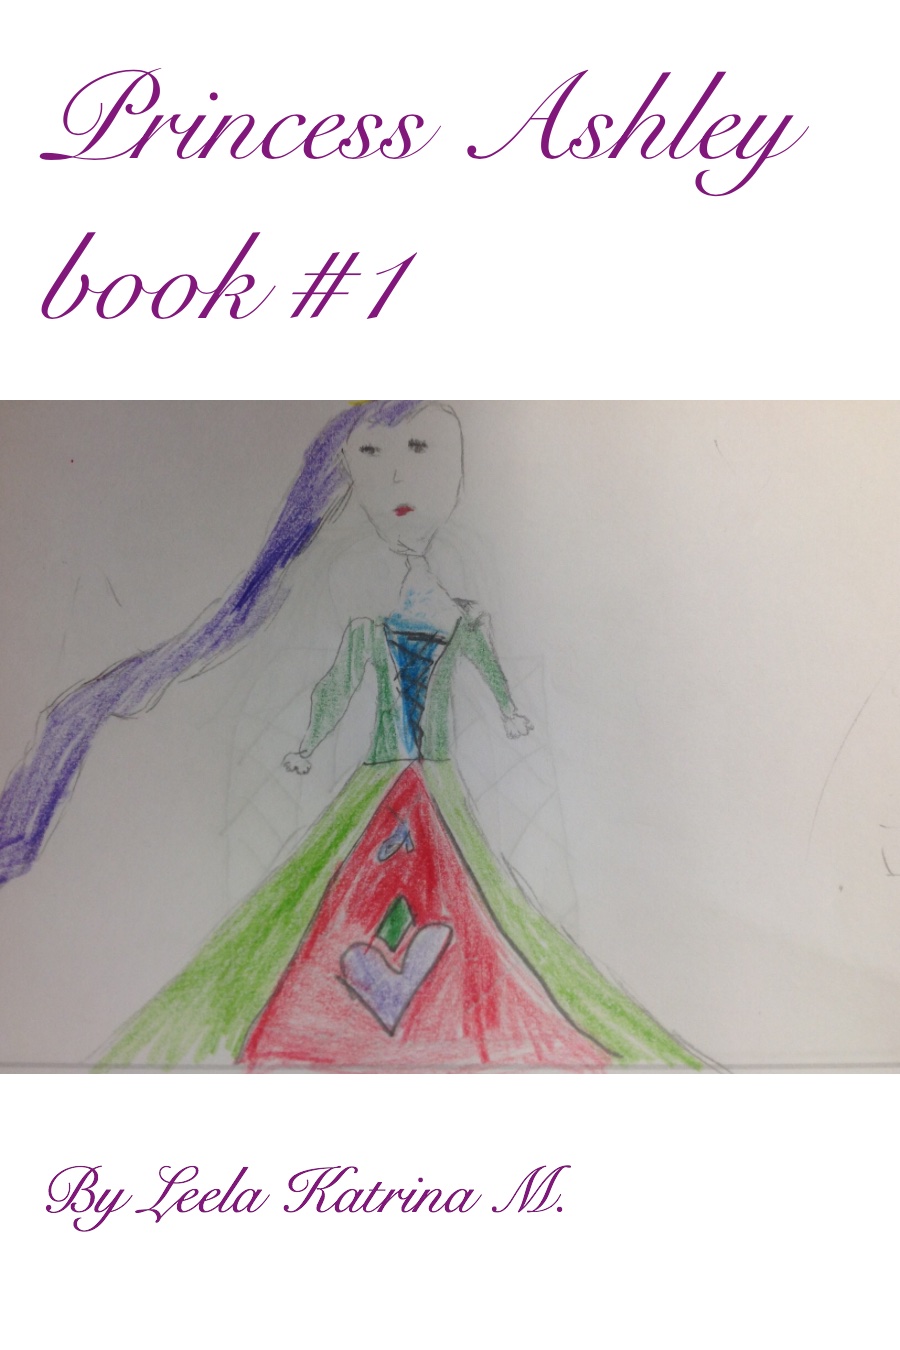 Princess Ashley Book #1 by Leela Katrina M